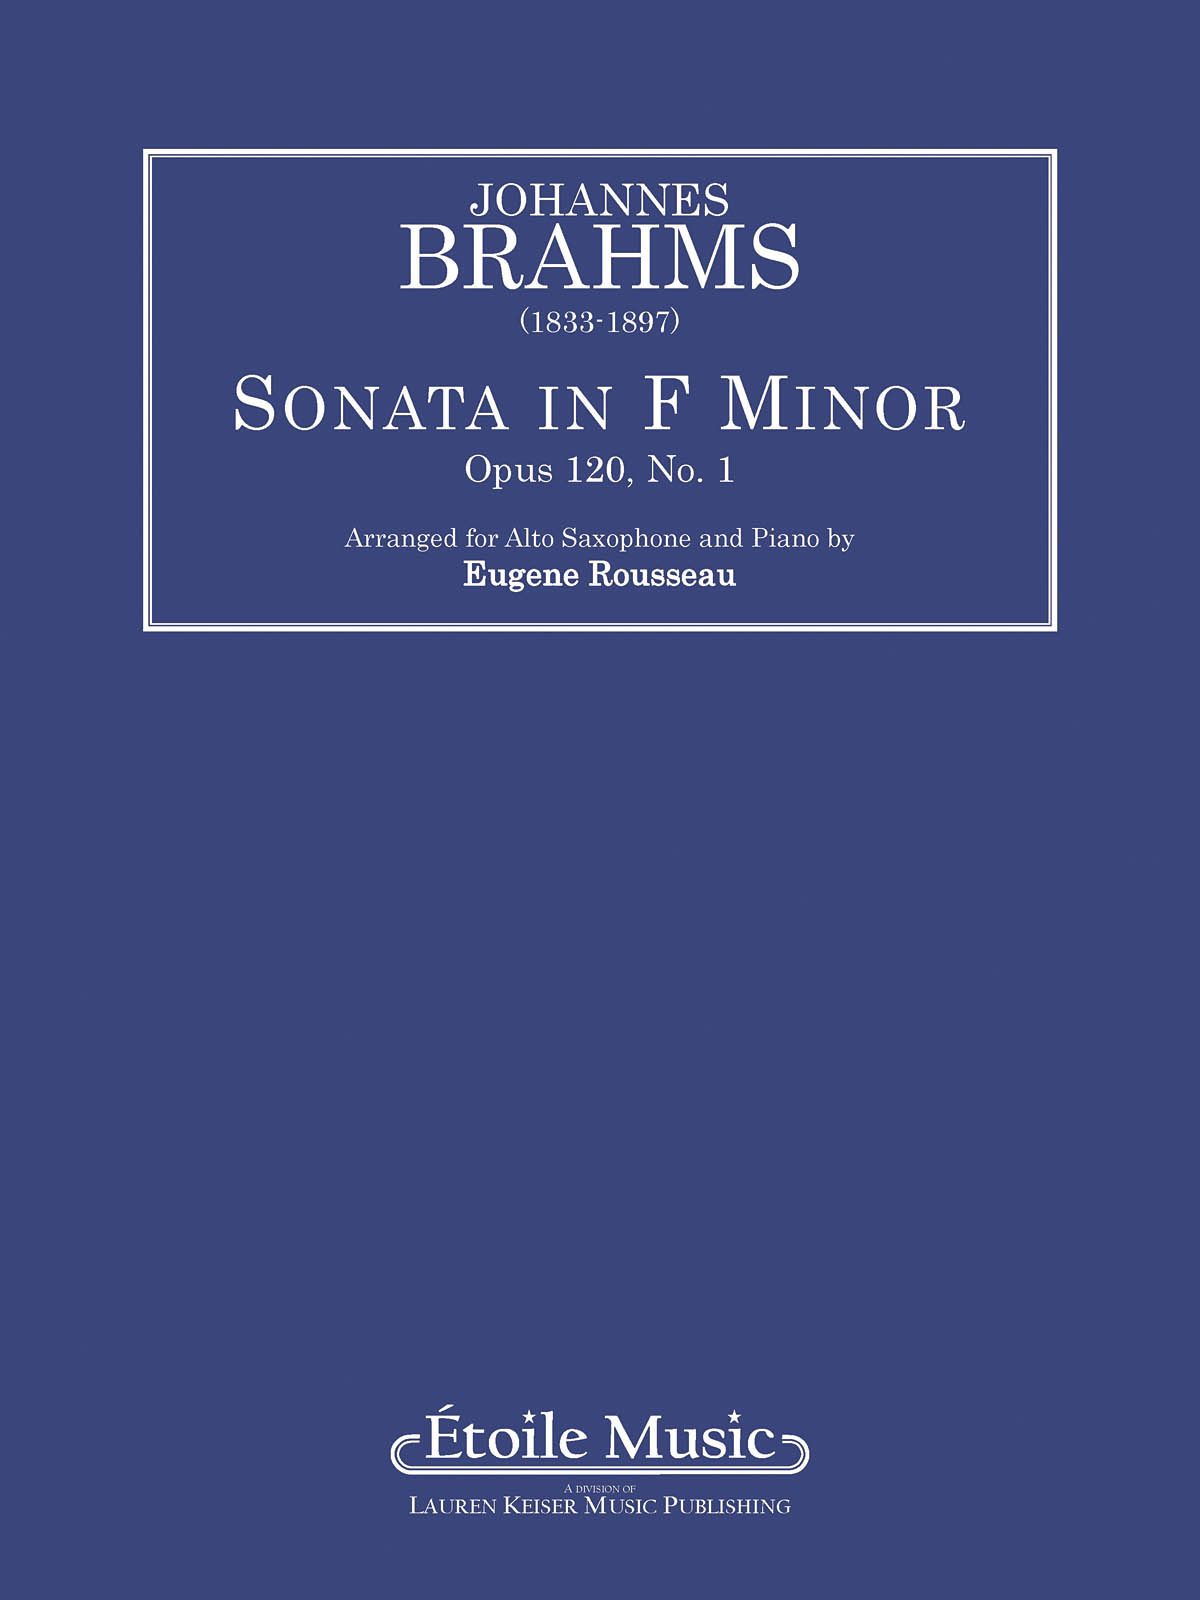 Johannes Brahms: Sonata Op. 120 No. 1 in F minor: Alto Saxophone and Accomp.: